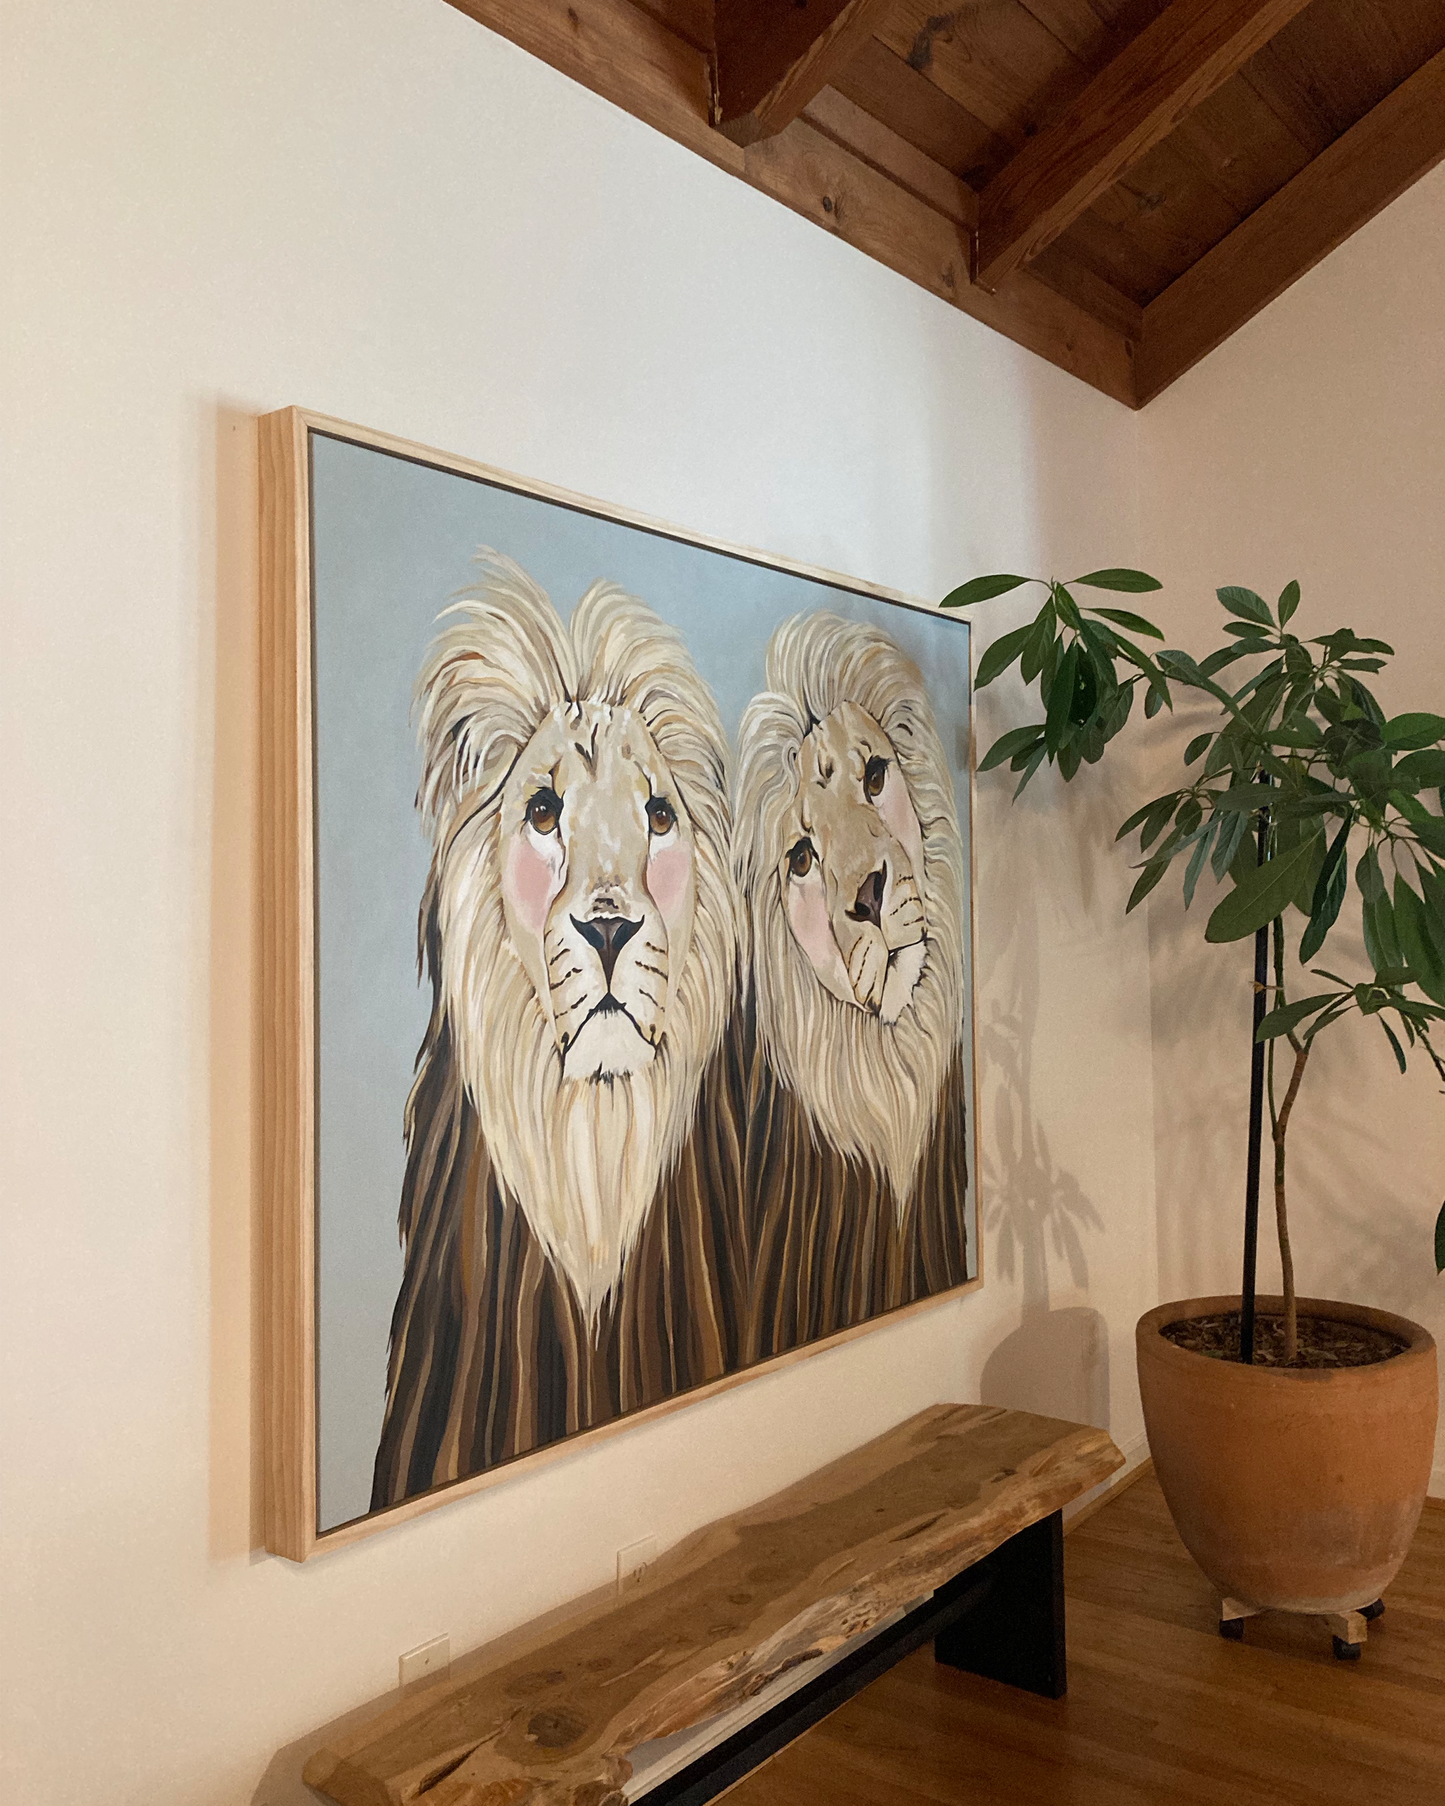 The Lion Kings Original Painting